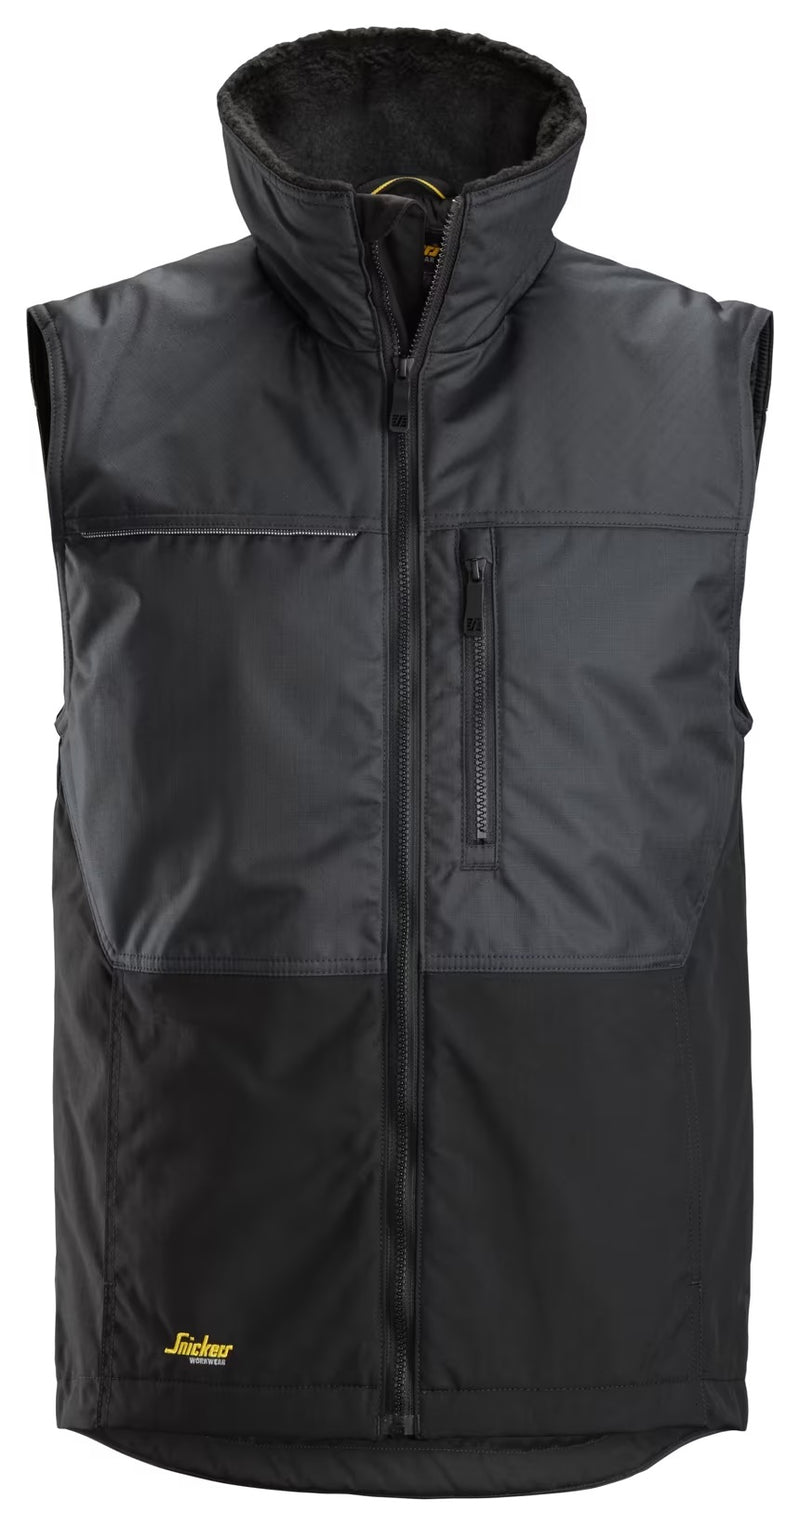 Snickers Workwear 4548 AllroundWork Winter Vest - Steel Grey/Black